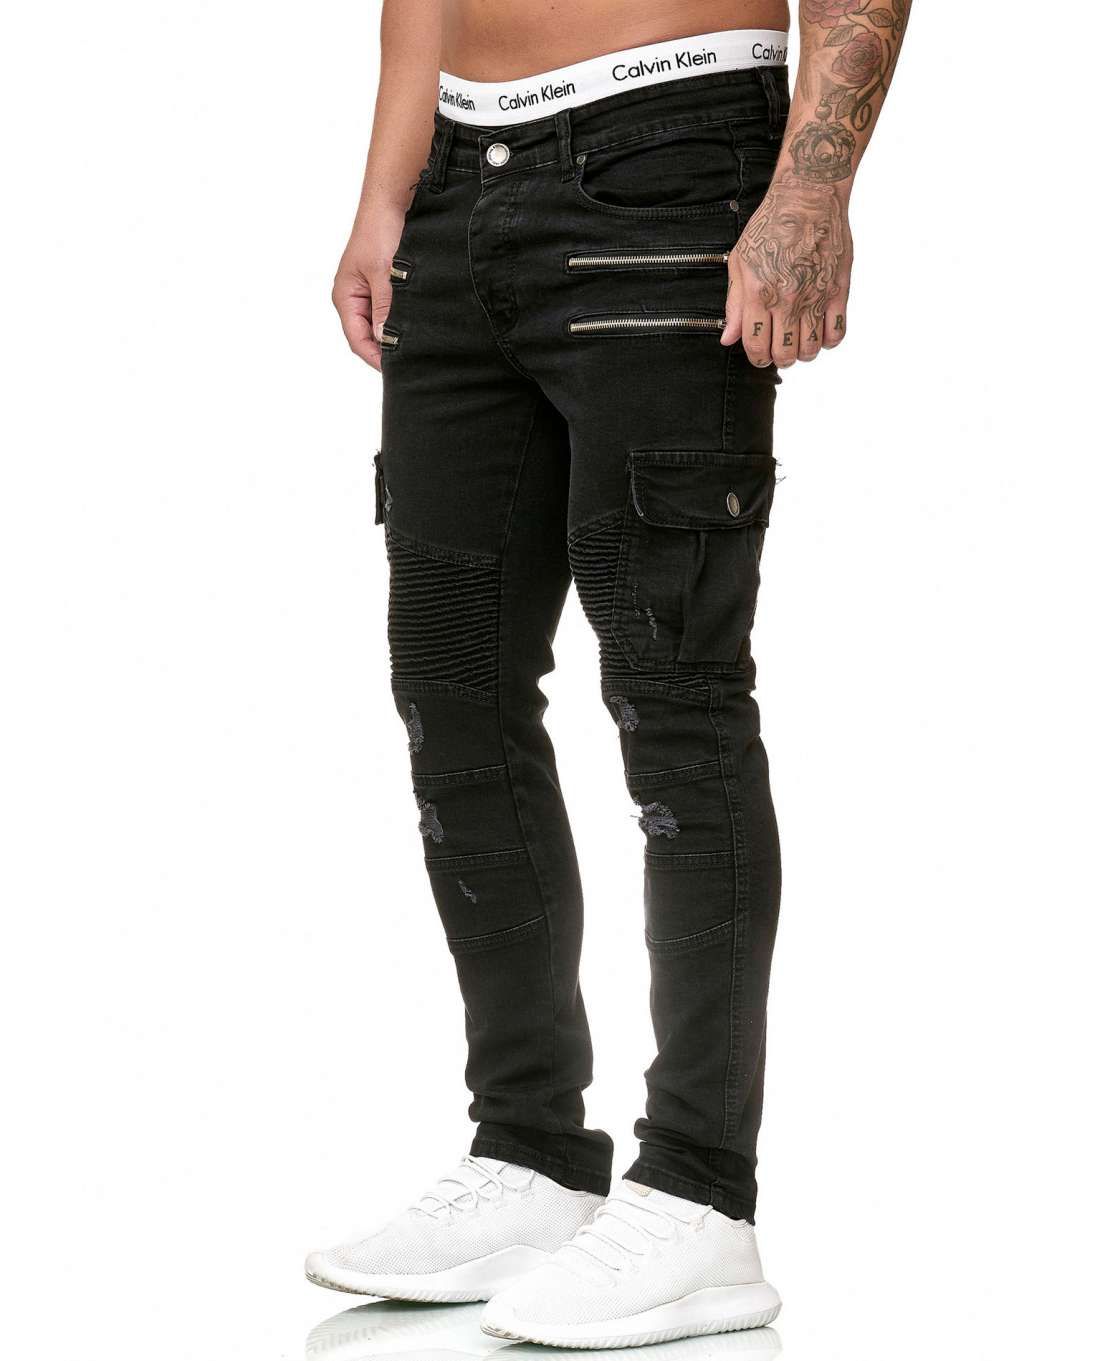 Zipper Black Jeans L32 Jerone - 5161 - Jeans - Jerone.com